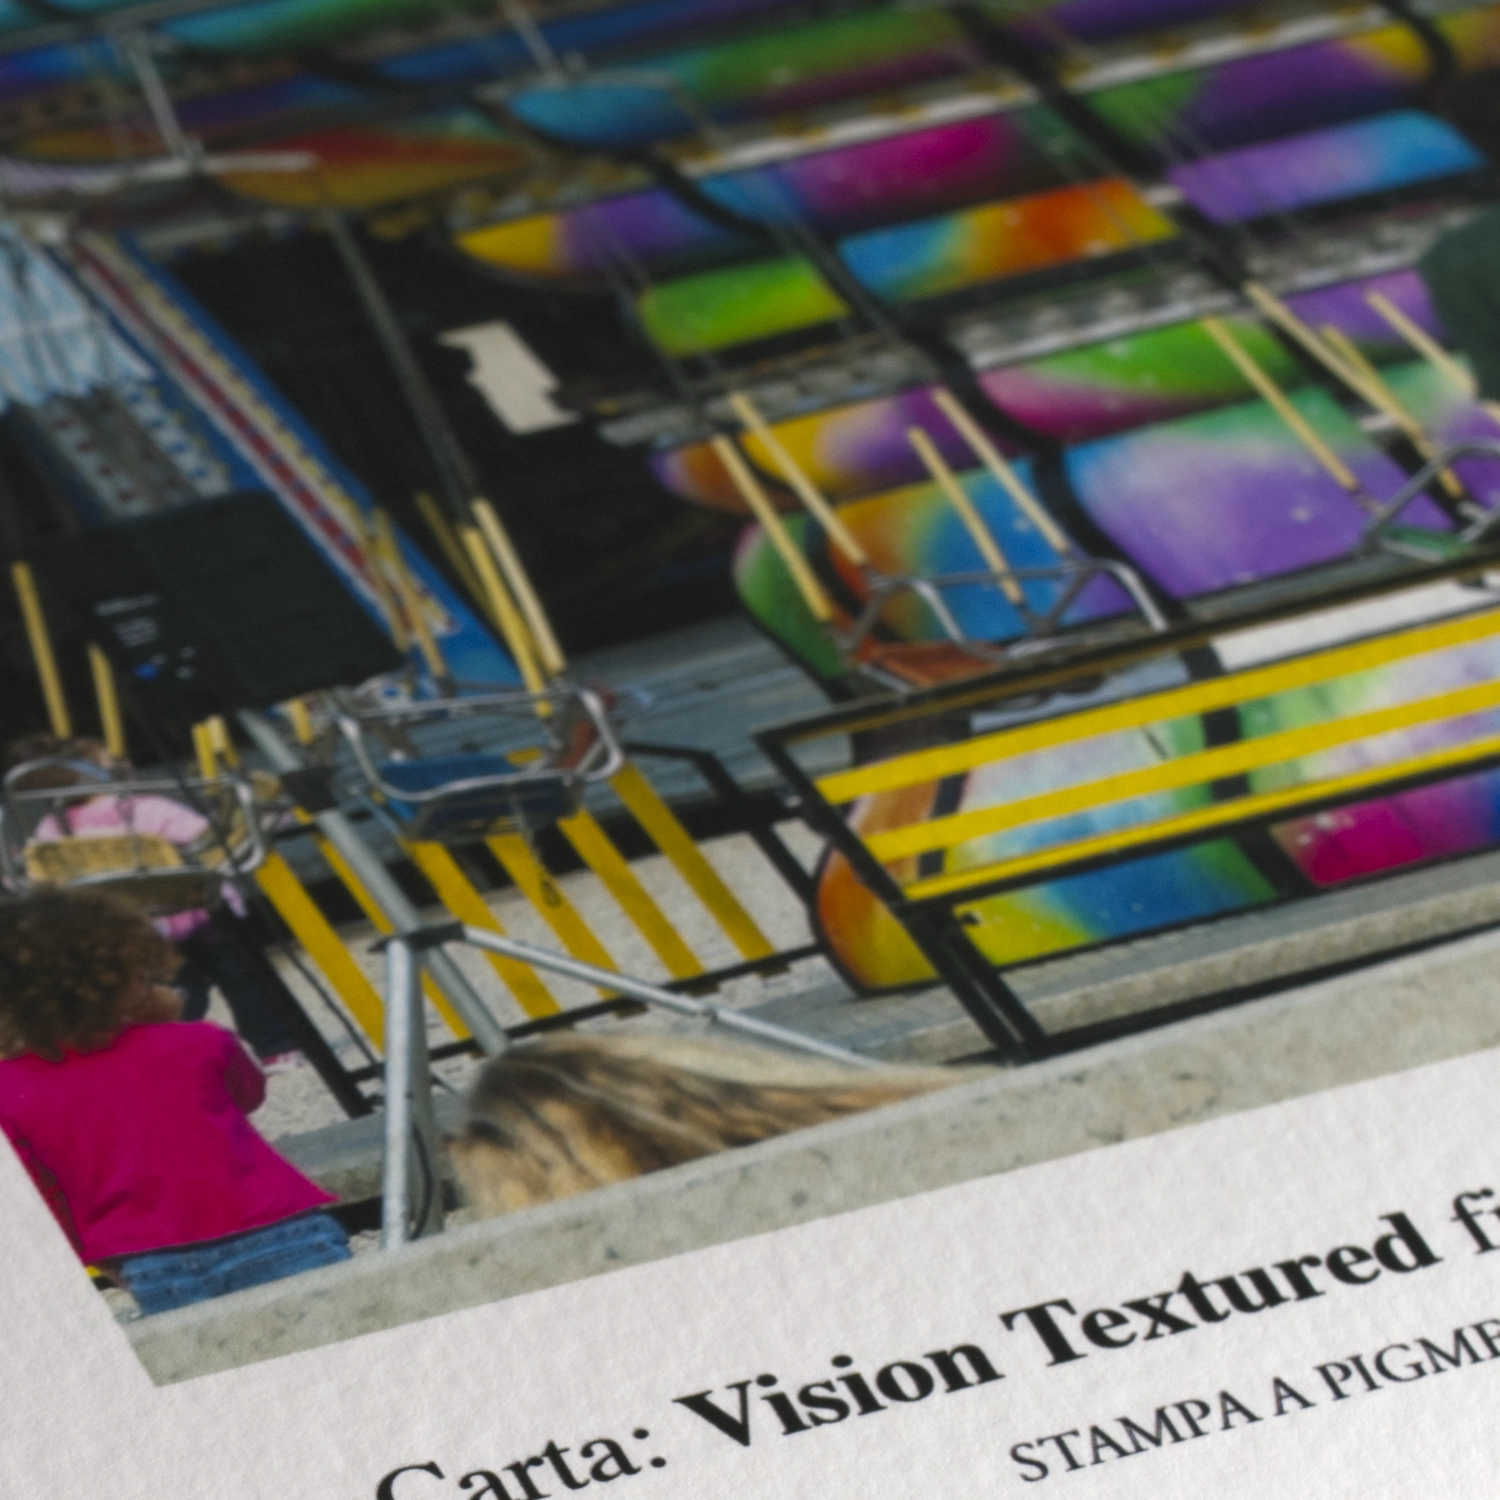 carta ArtOk Vision Textured 300 gsm polycotton detail